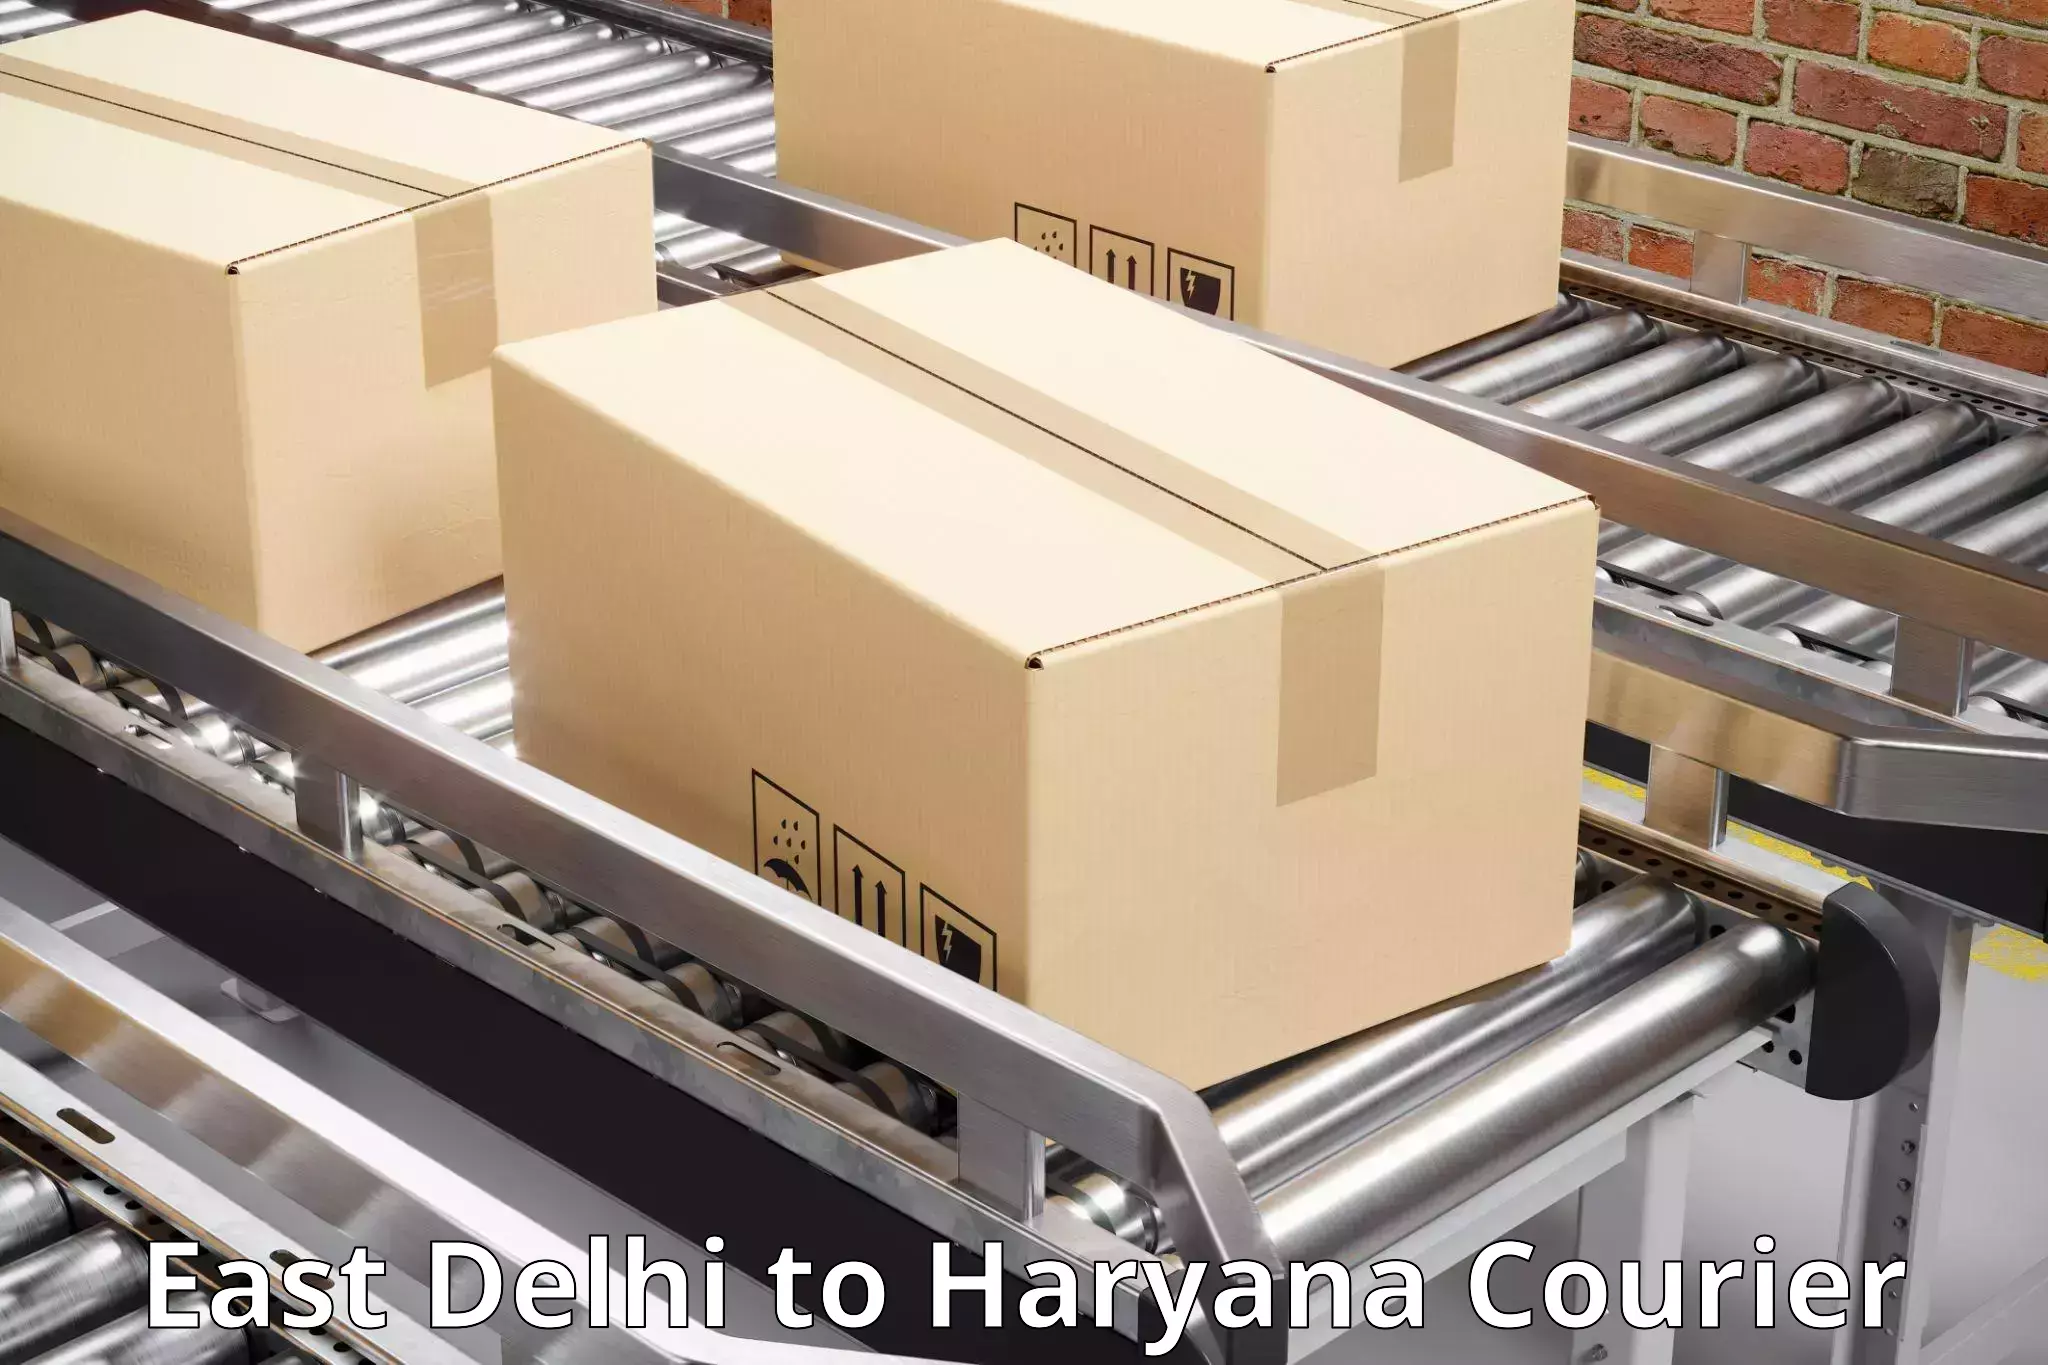 Cash on delivery service East Delhi to Julana